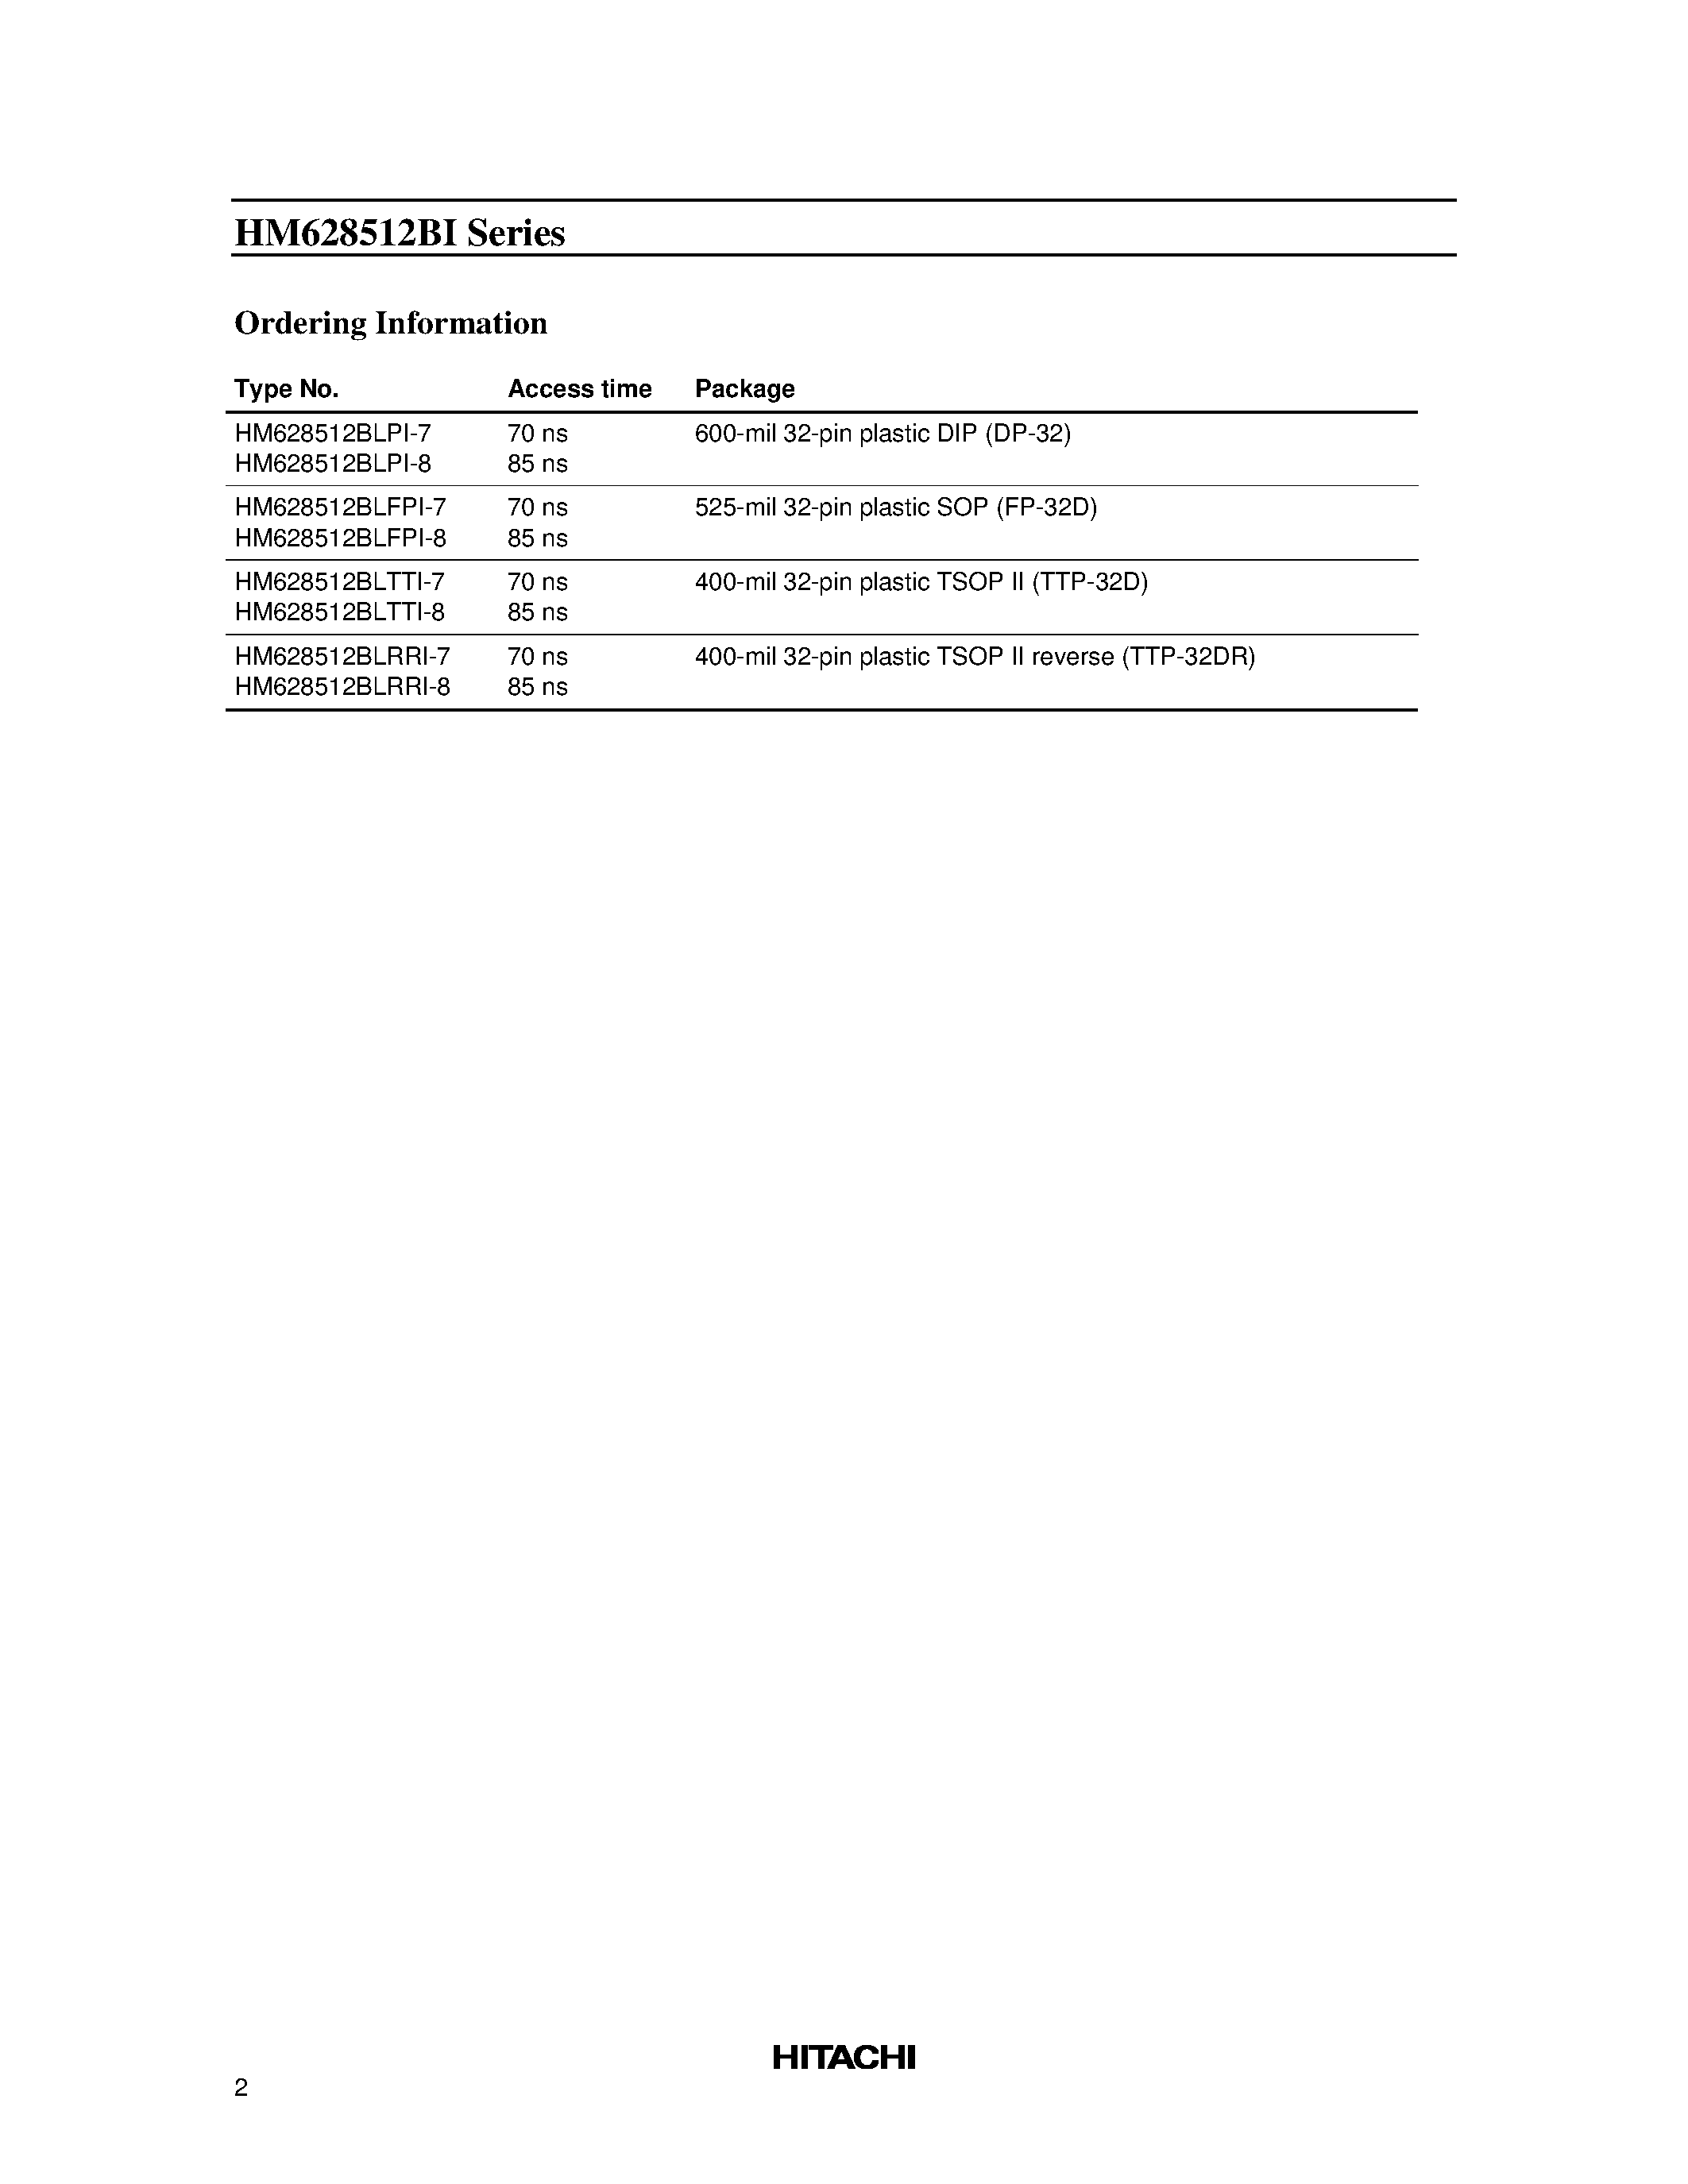 Datasheet HM628512BLTTI-8 - 4 M SRAM (512-kword x 8-bit) page 2